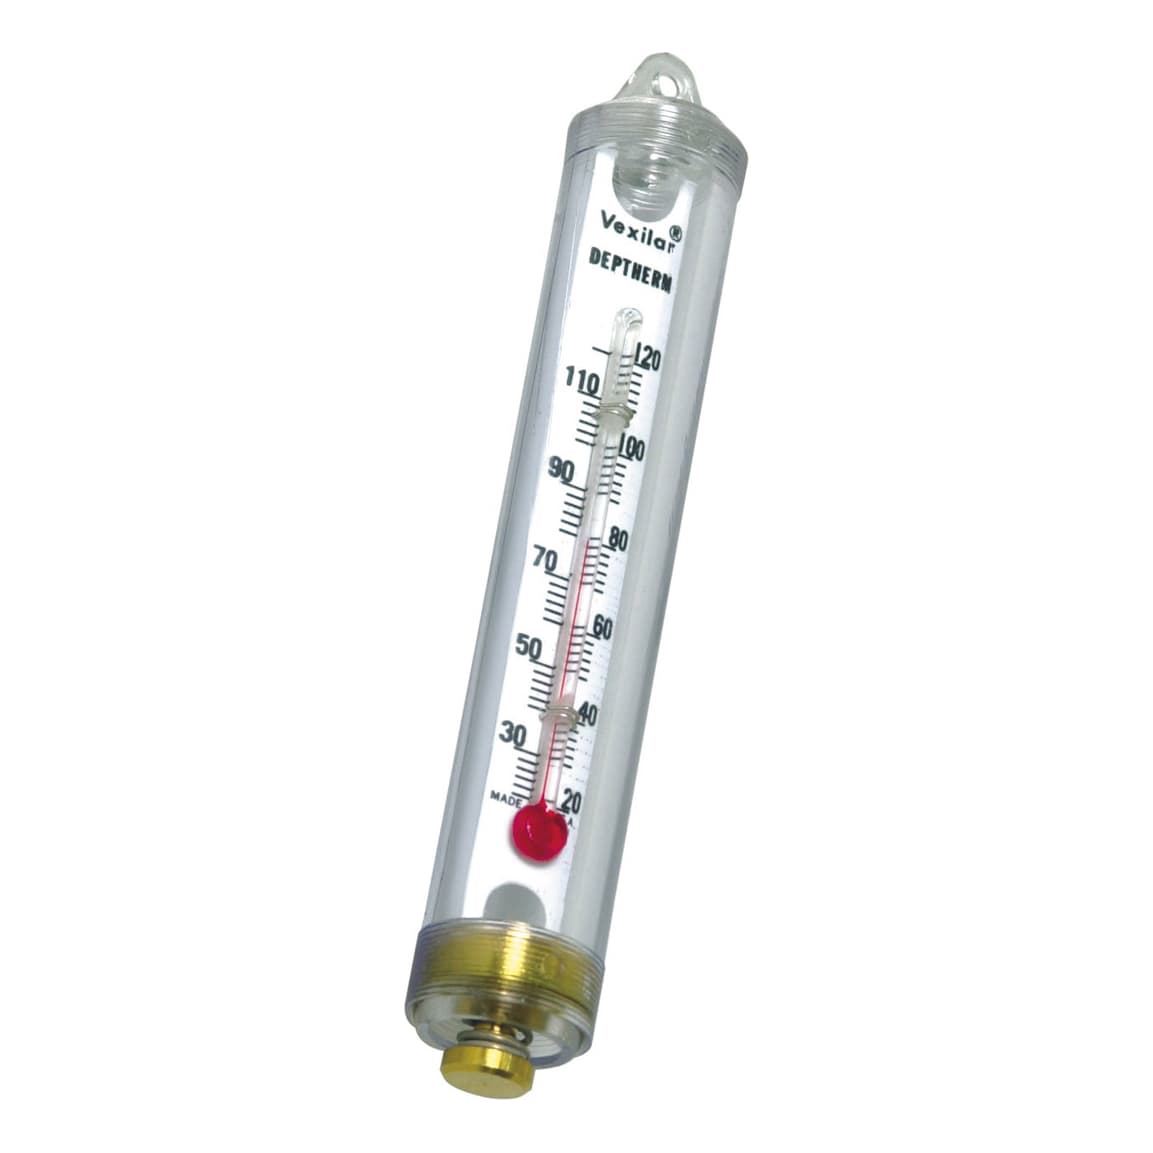 Vexilar Deptherm Thermometer